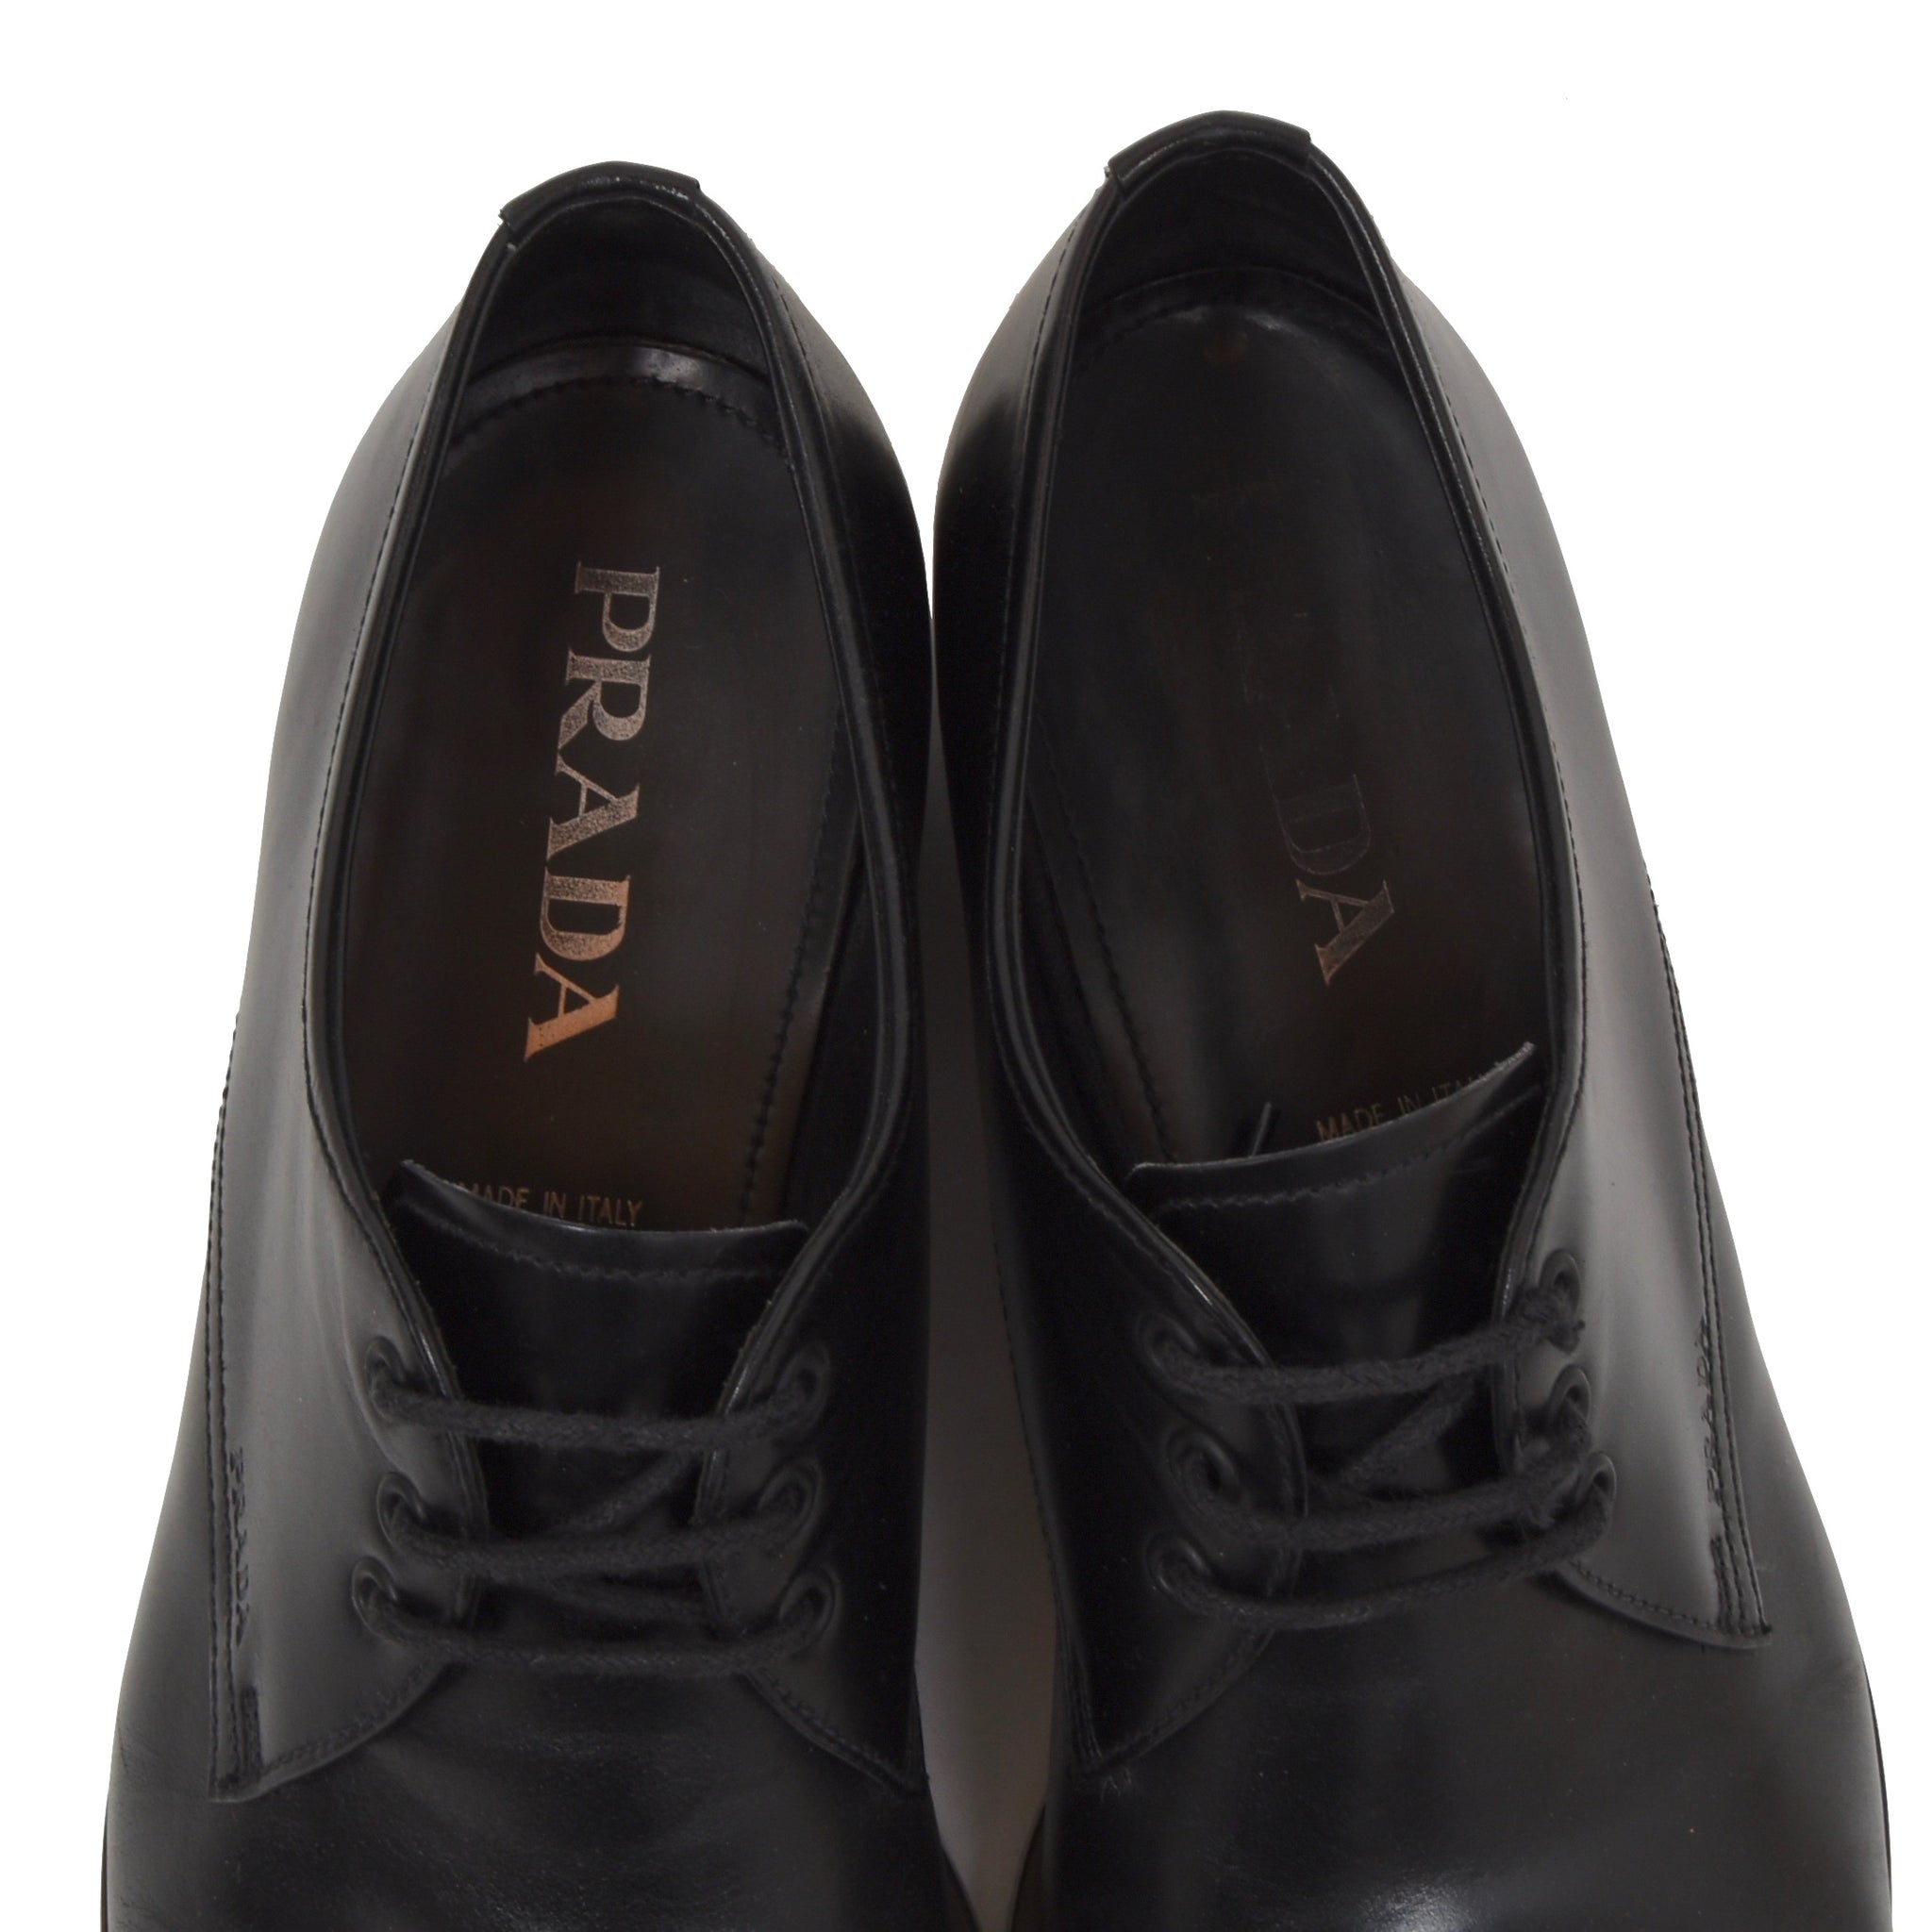 Prada Plain Toe Leather Shoes Size 8.5 